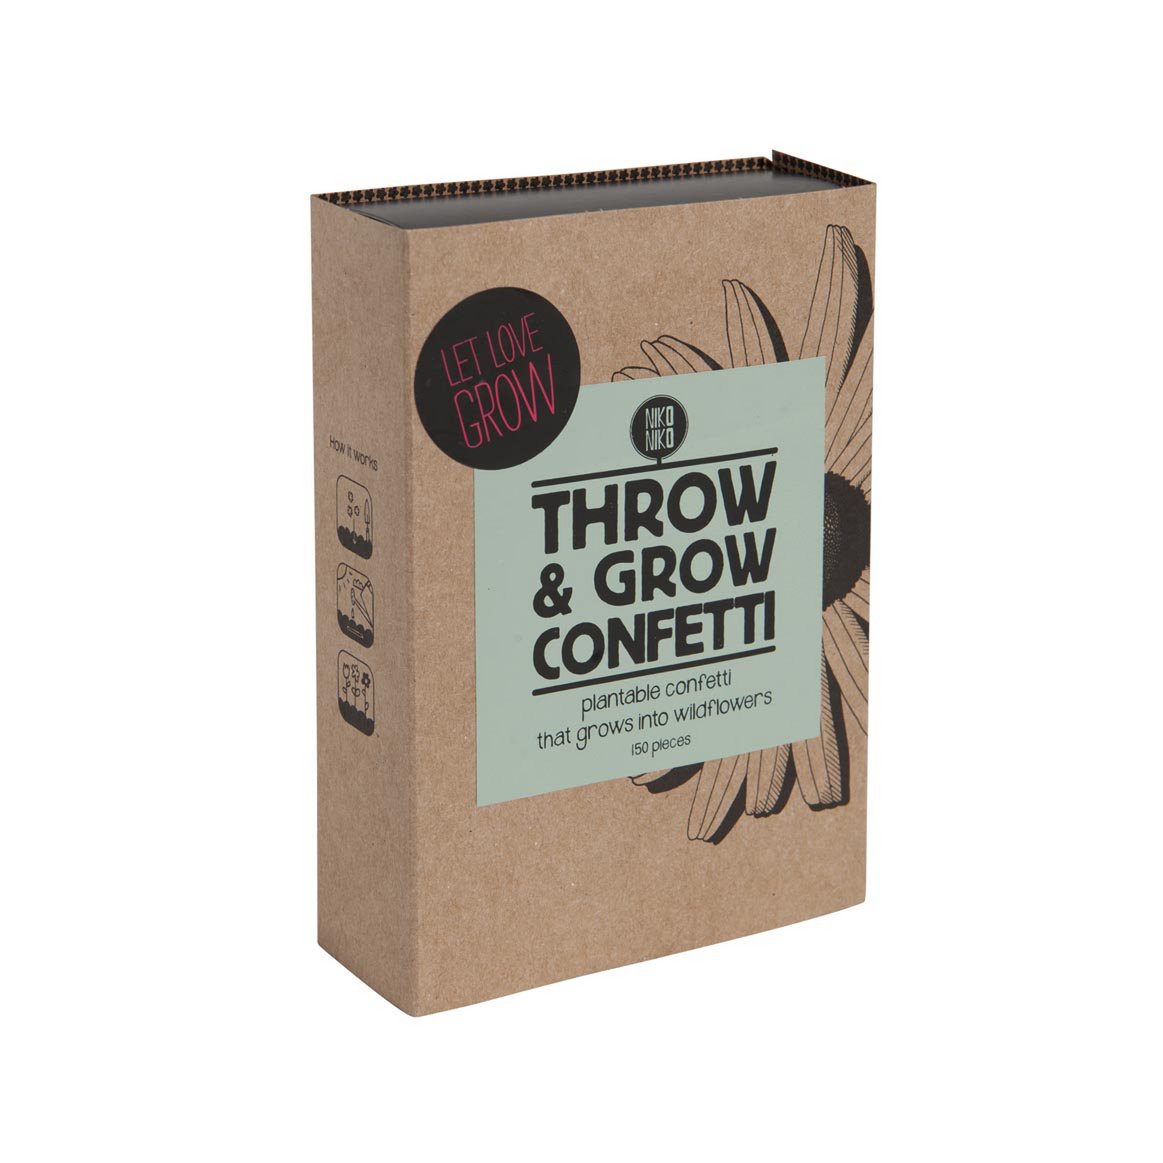 Throw & grow confetti hartjes